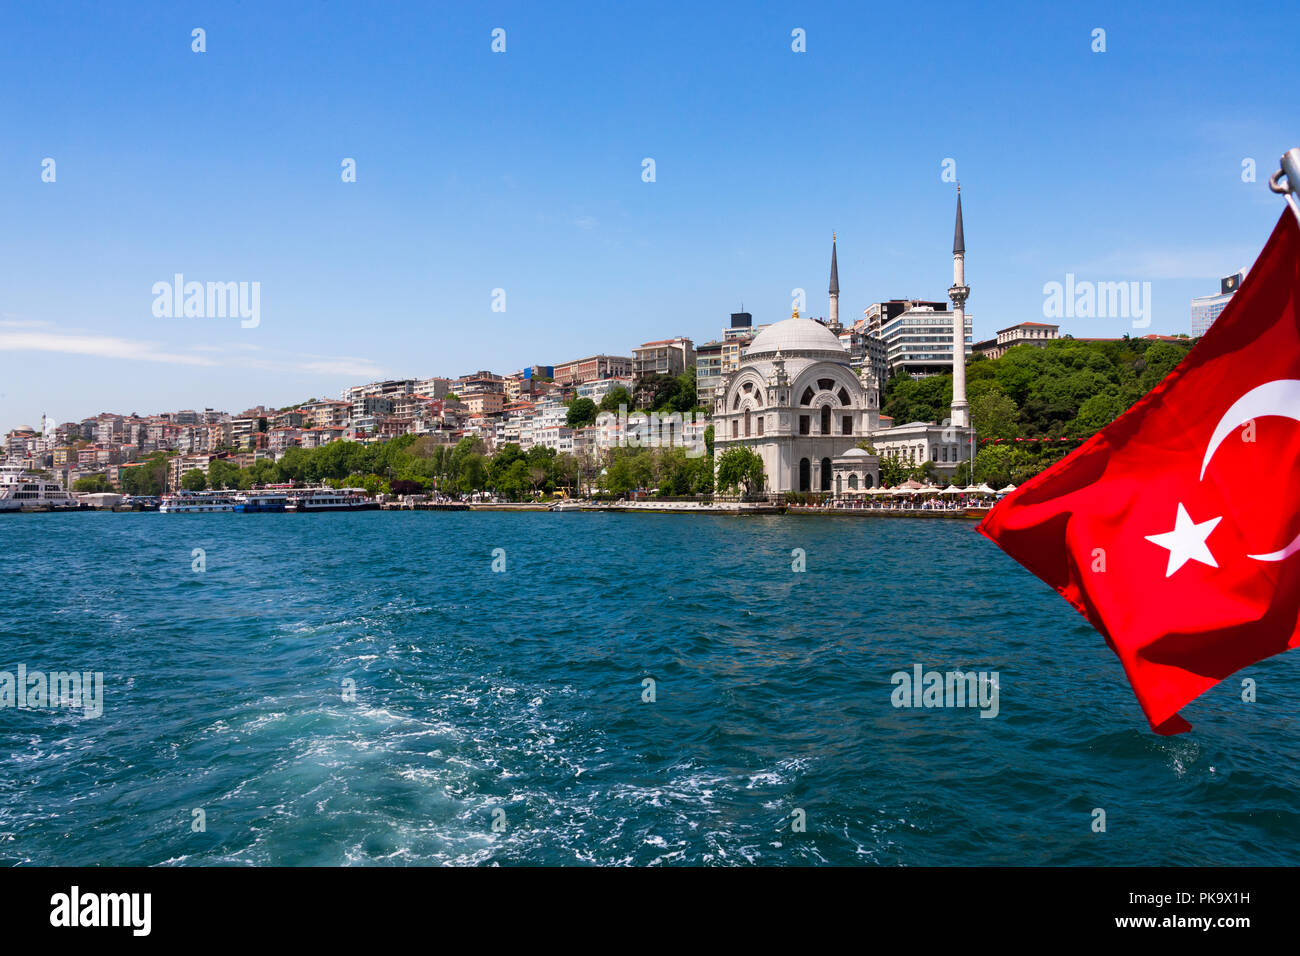 La Moschea Ortakoy e bandiera nazionale, Golden Horn, Istanbul, Turchia Foto Stock